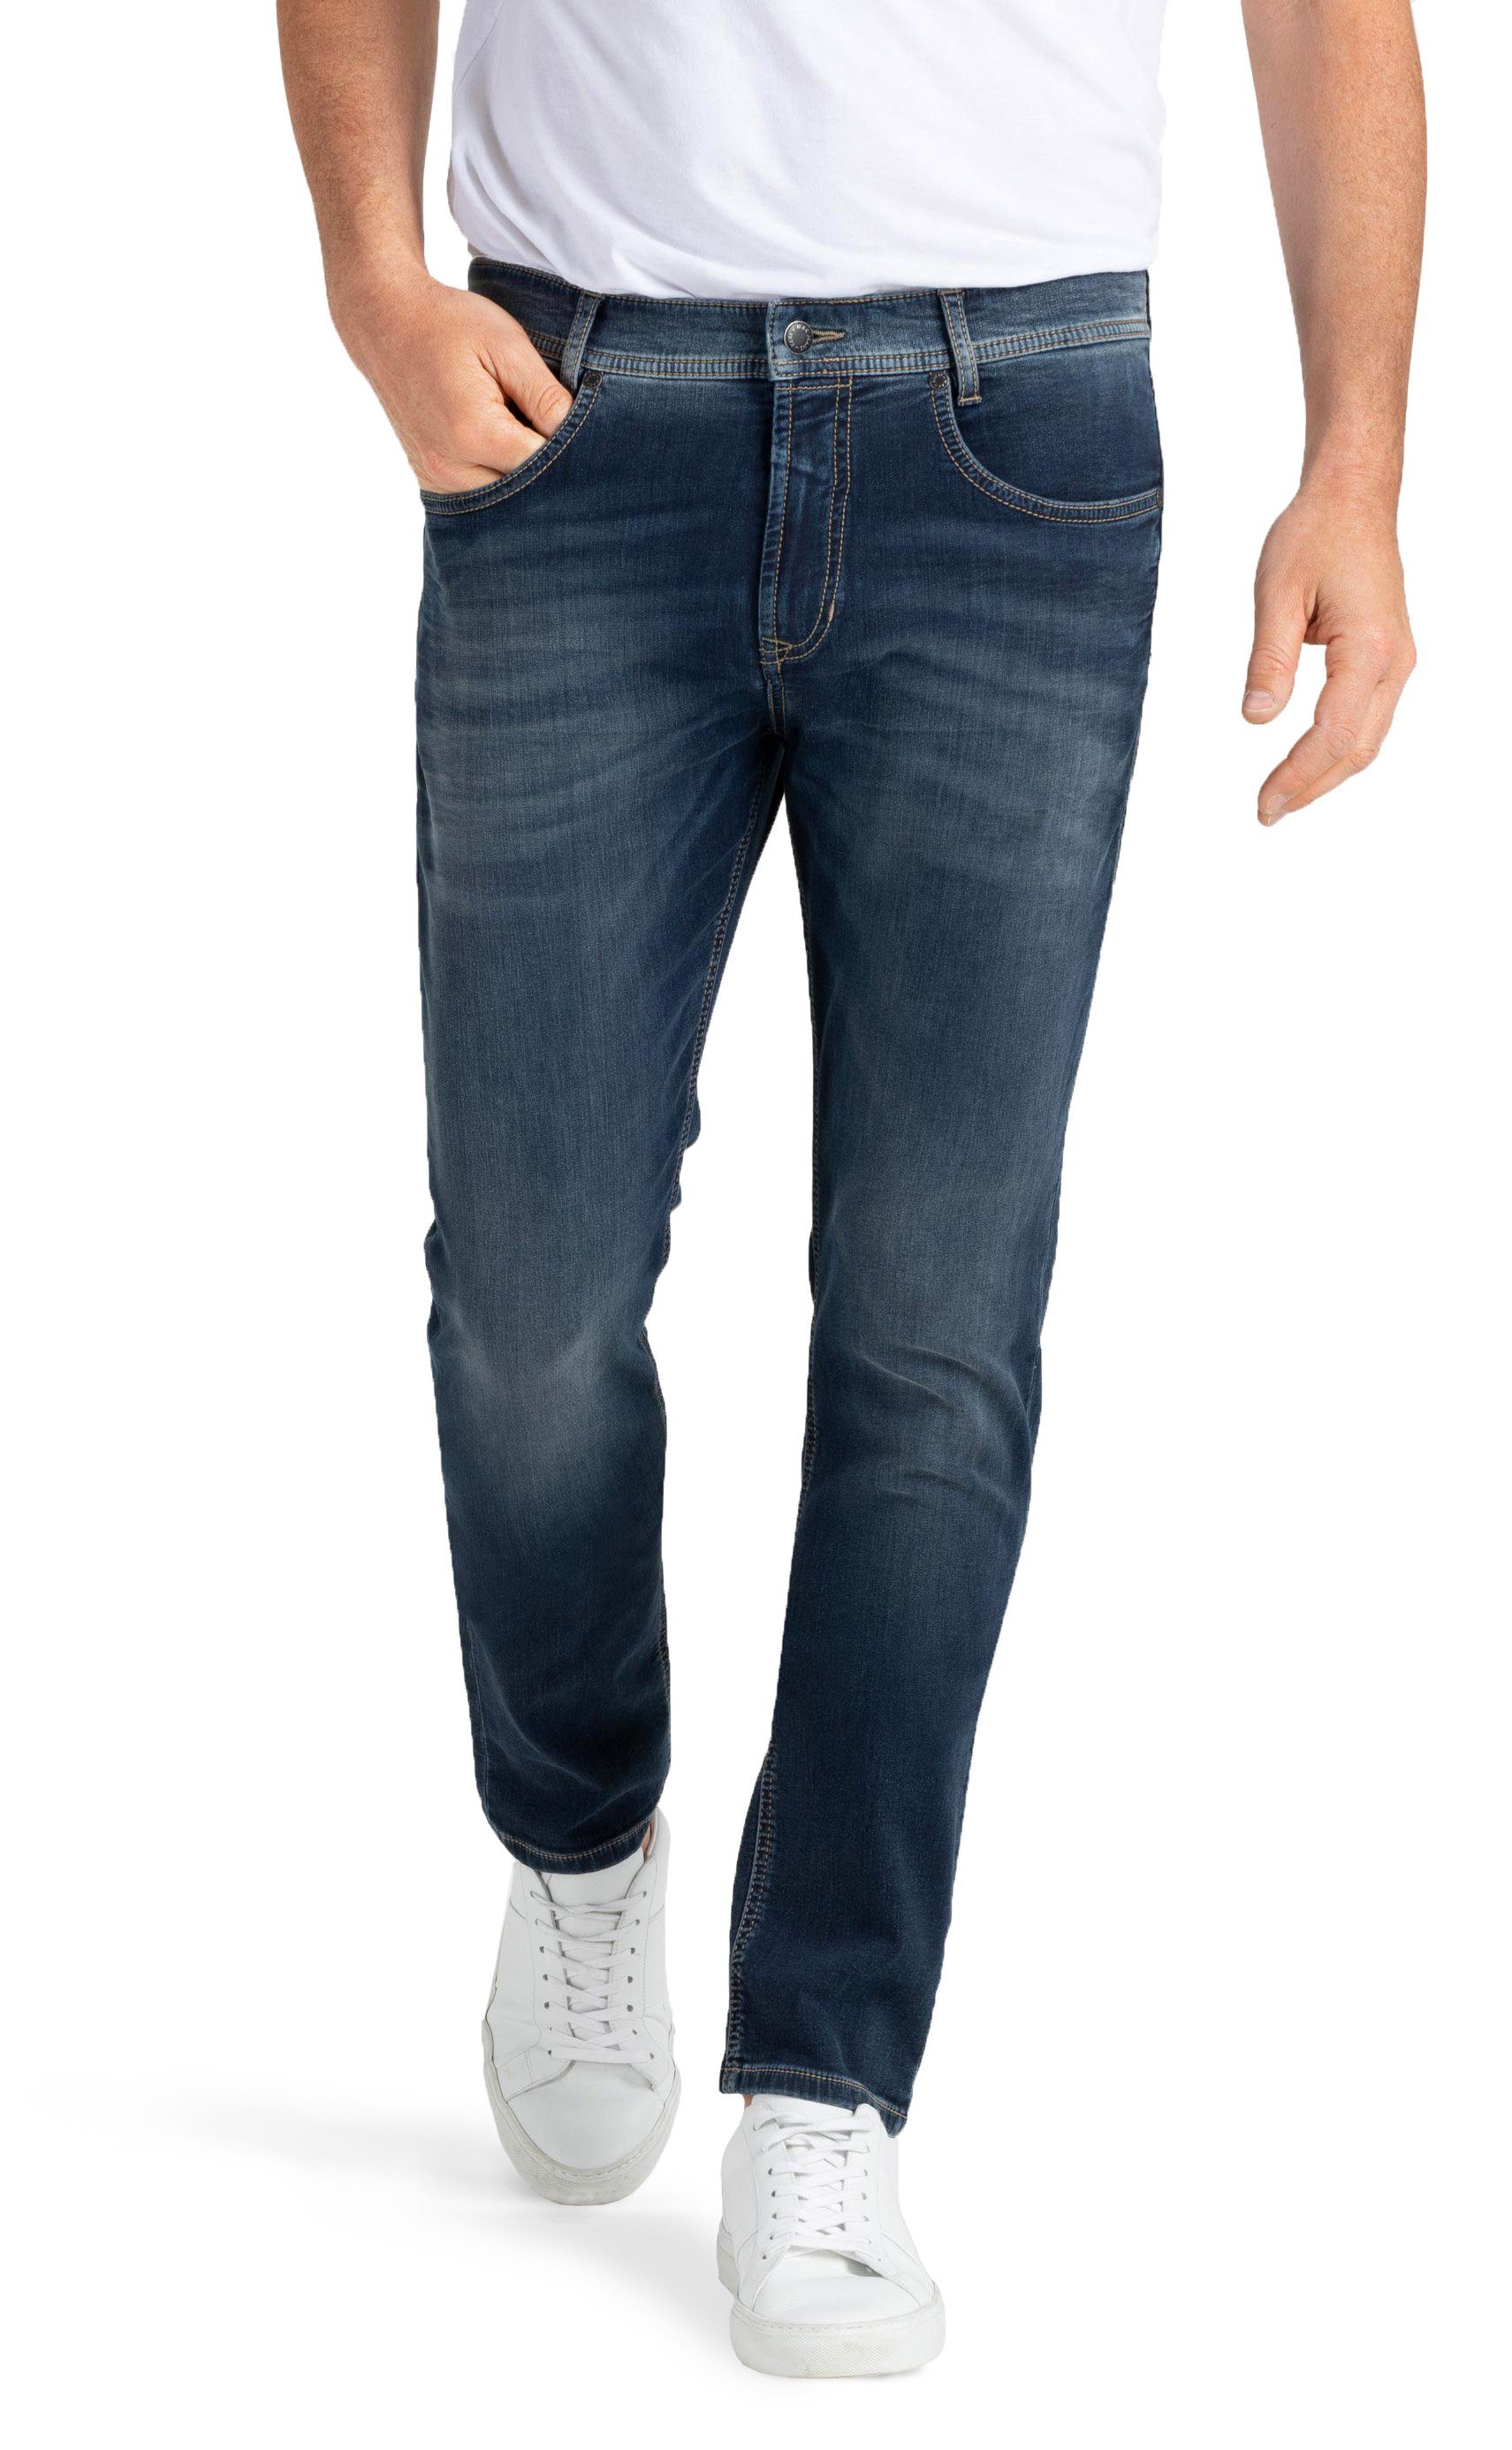 MAC Dark Jeans Used Light Tinted H661 0994L Blue 5-Pocket-Jeans Jog'n Denim Sweat